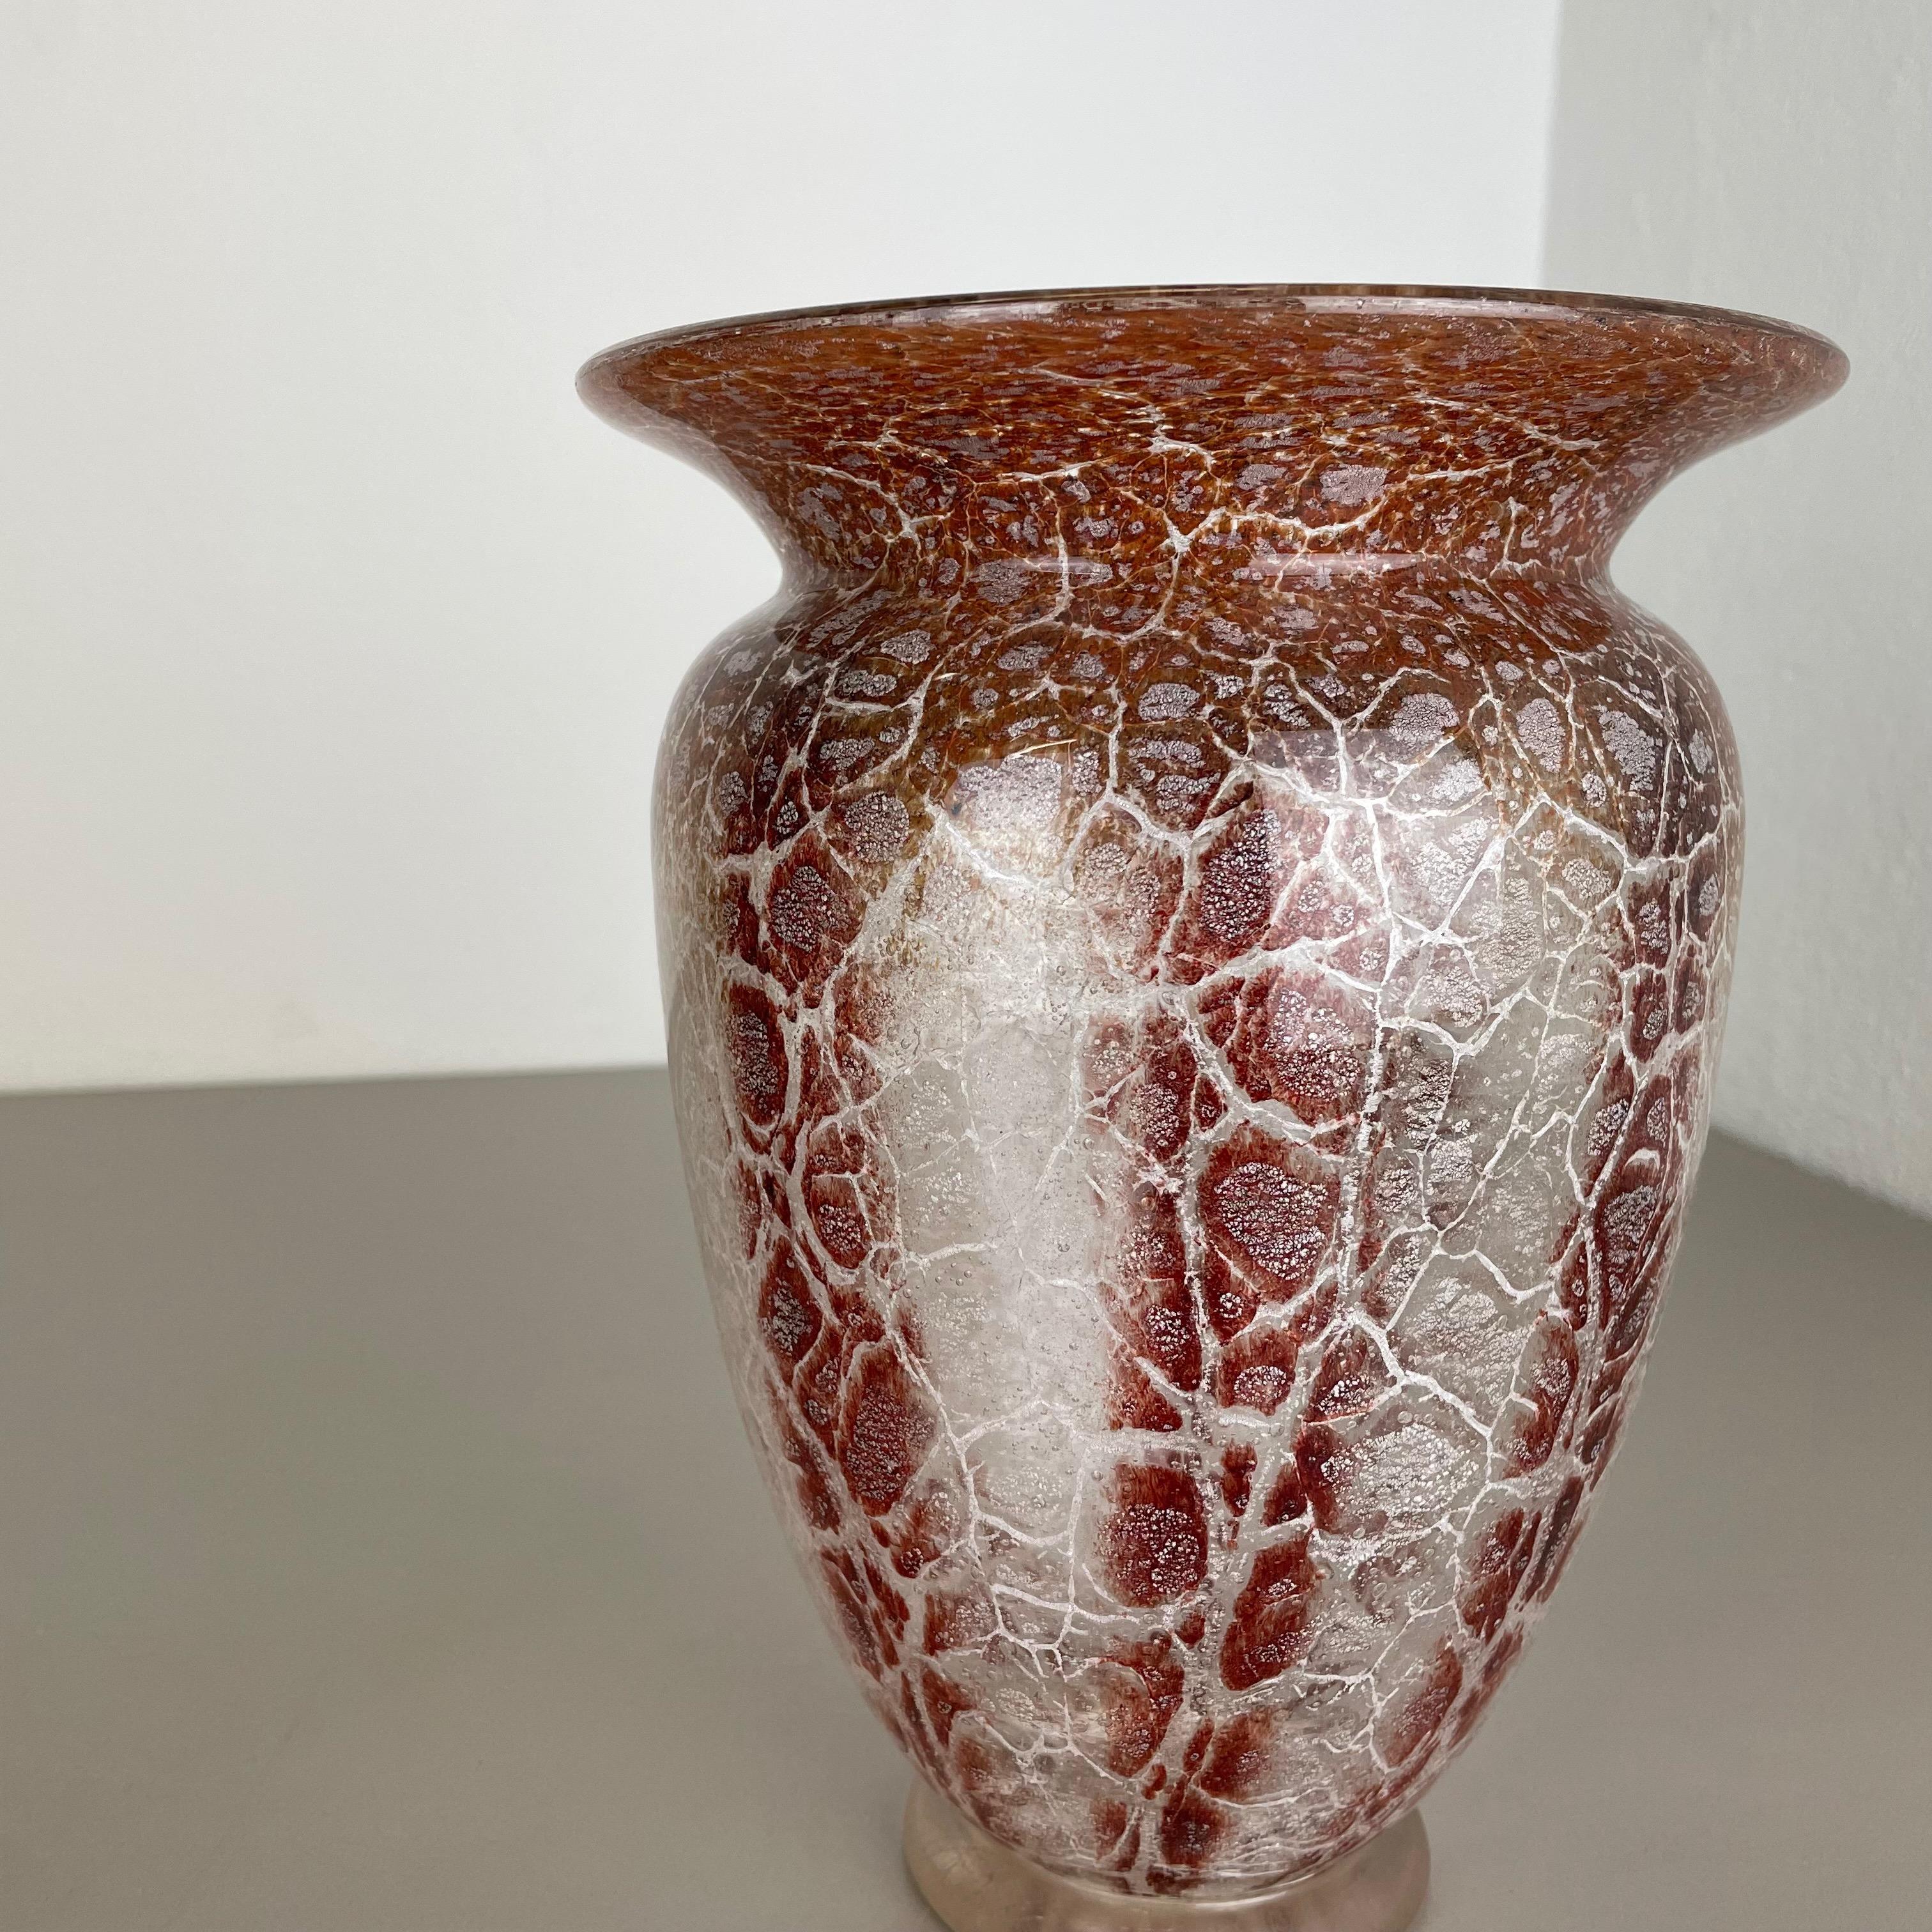 20th Century Ikora Glass Vase 2, 3kg by Karl Wiedmann for WMF Germany, 1930s Bauhaus Art Deco For Sale